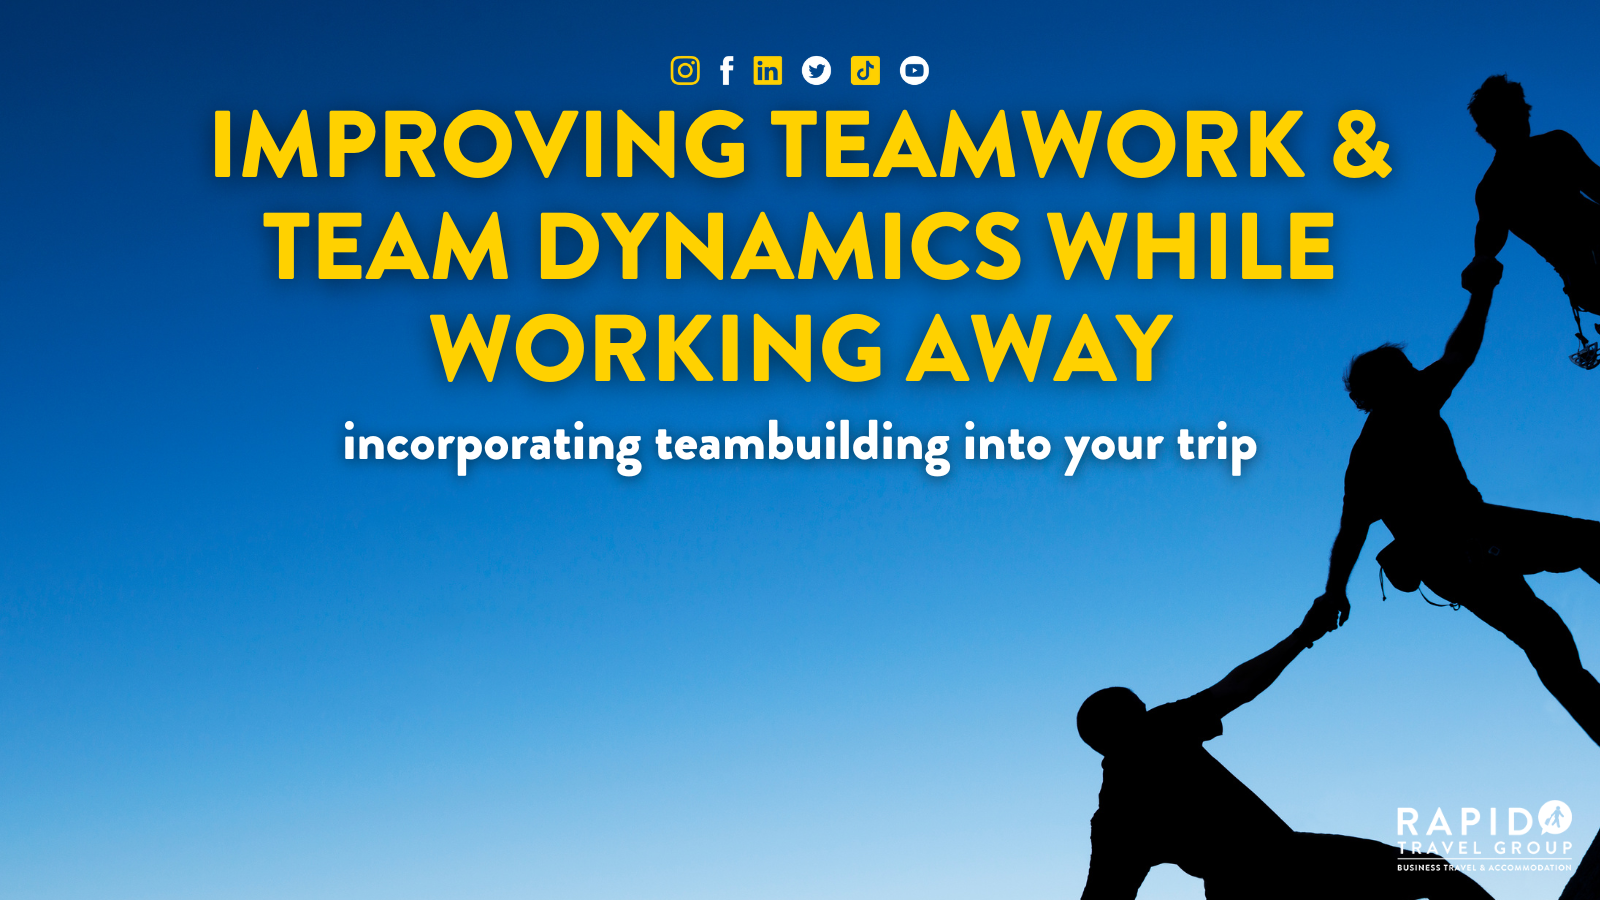 Improving teamwork & team dynamics while working away